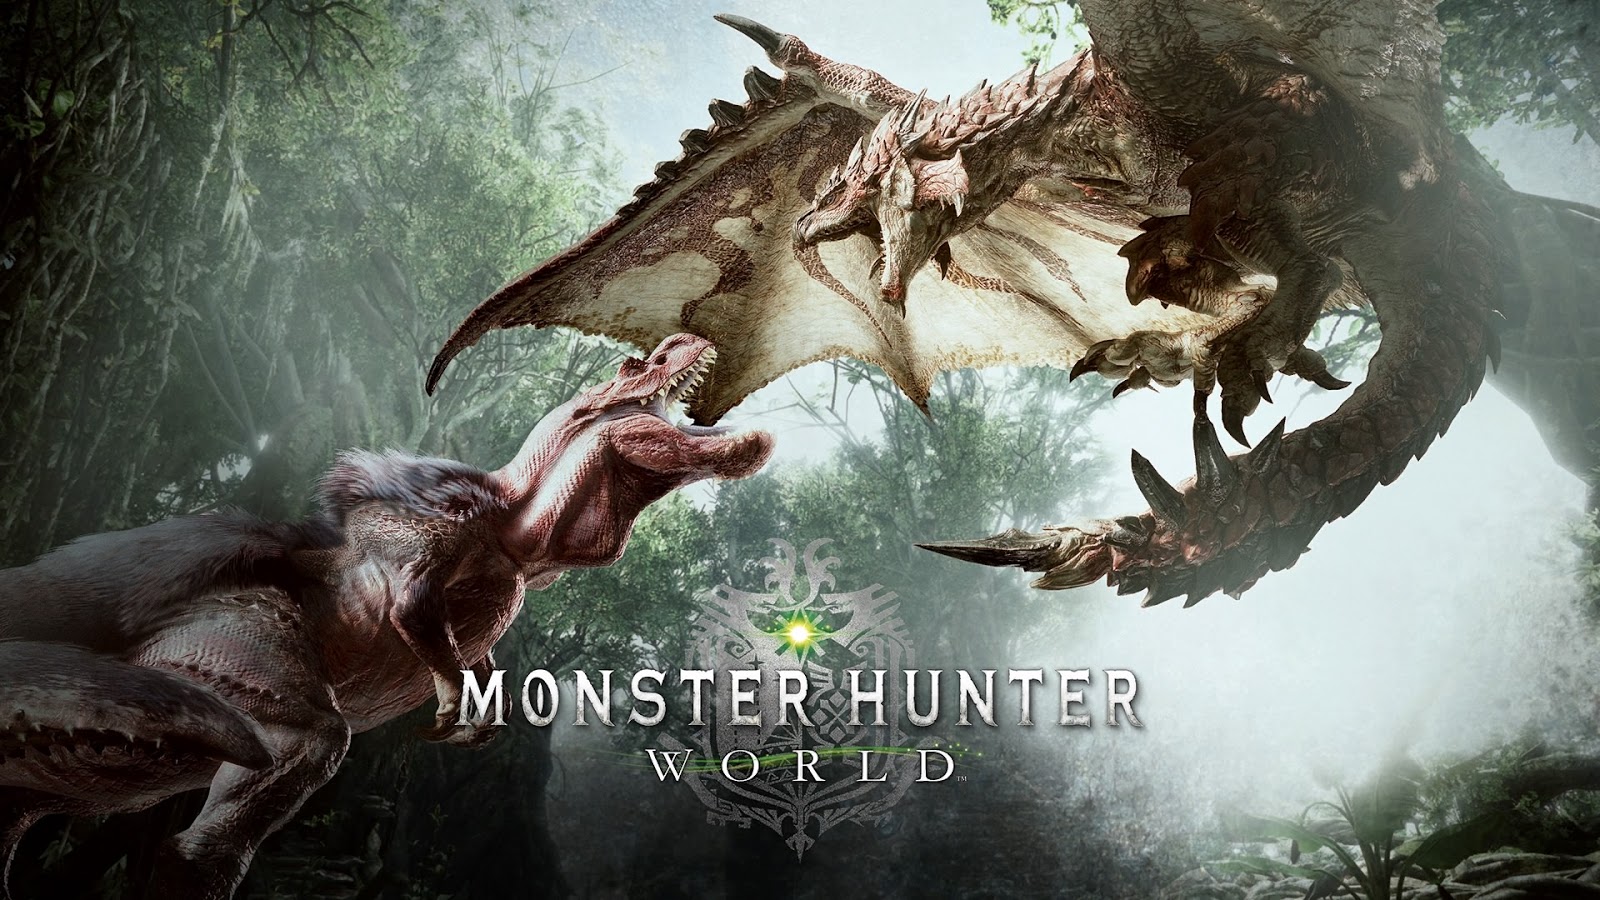 Análise: Monster Hunter World (Multi) é a clássica caçada de